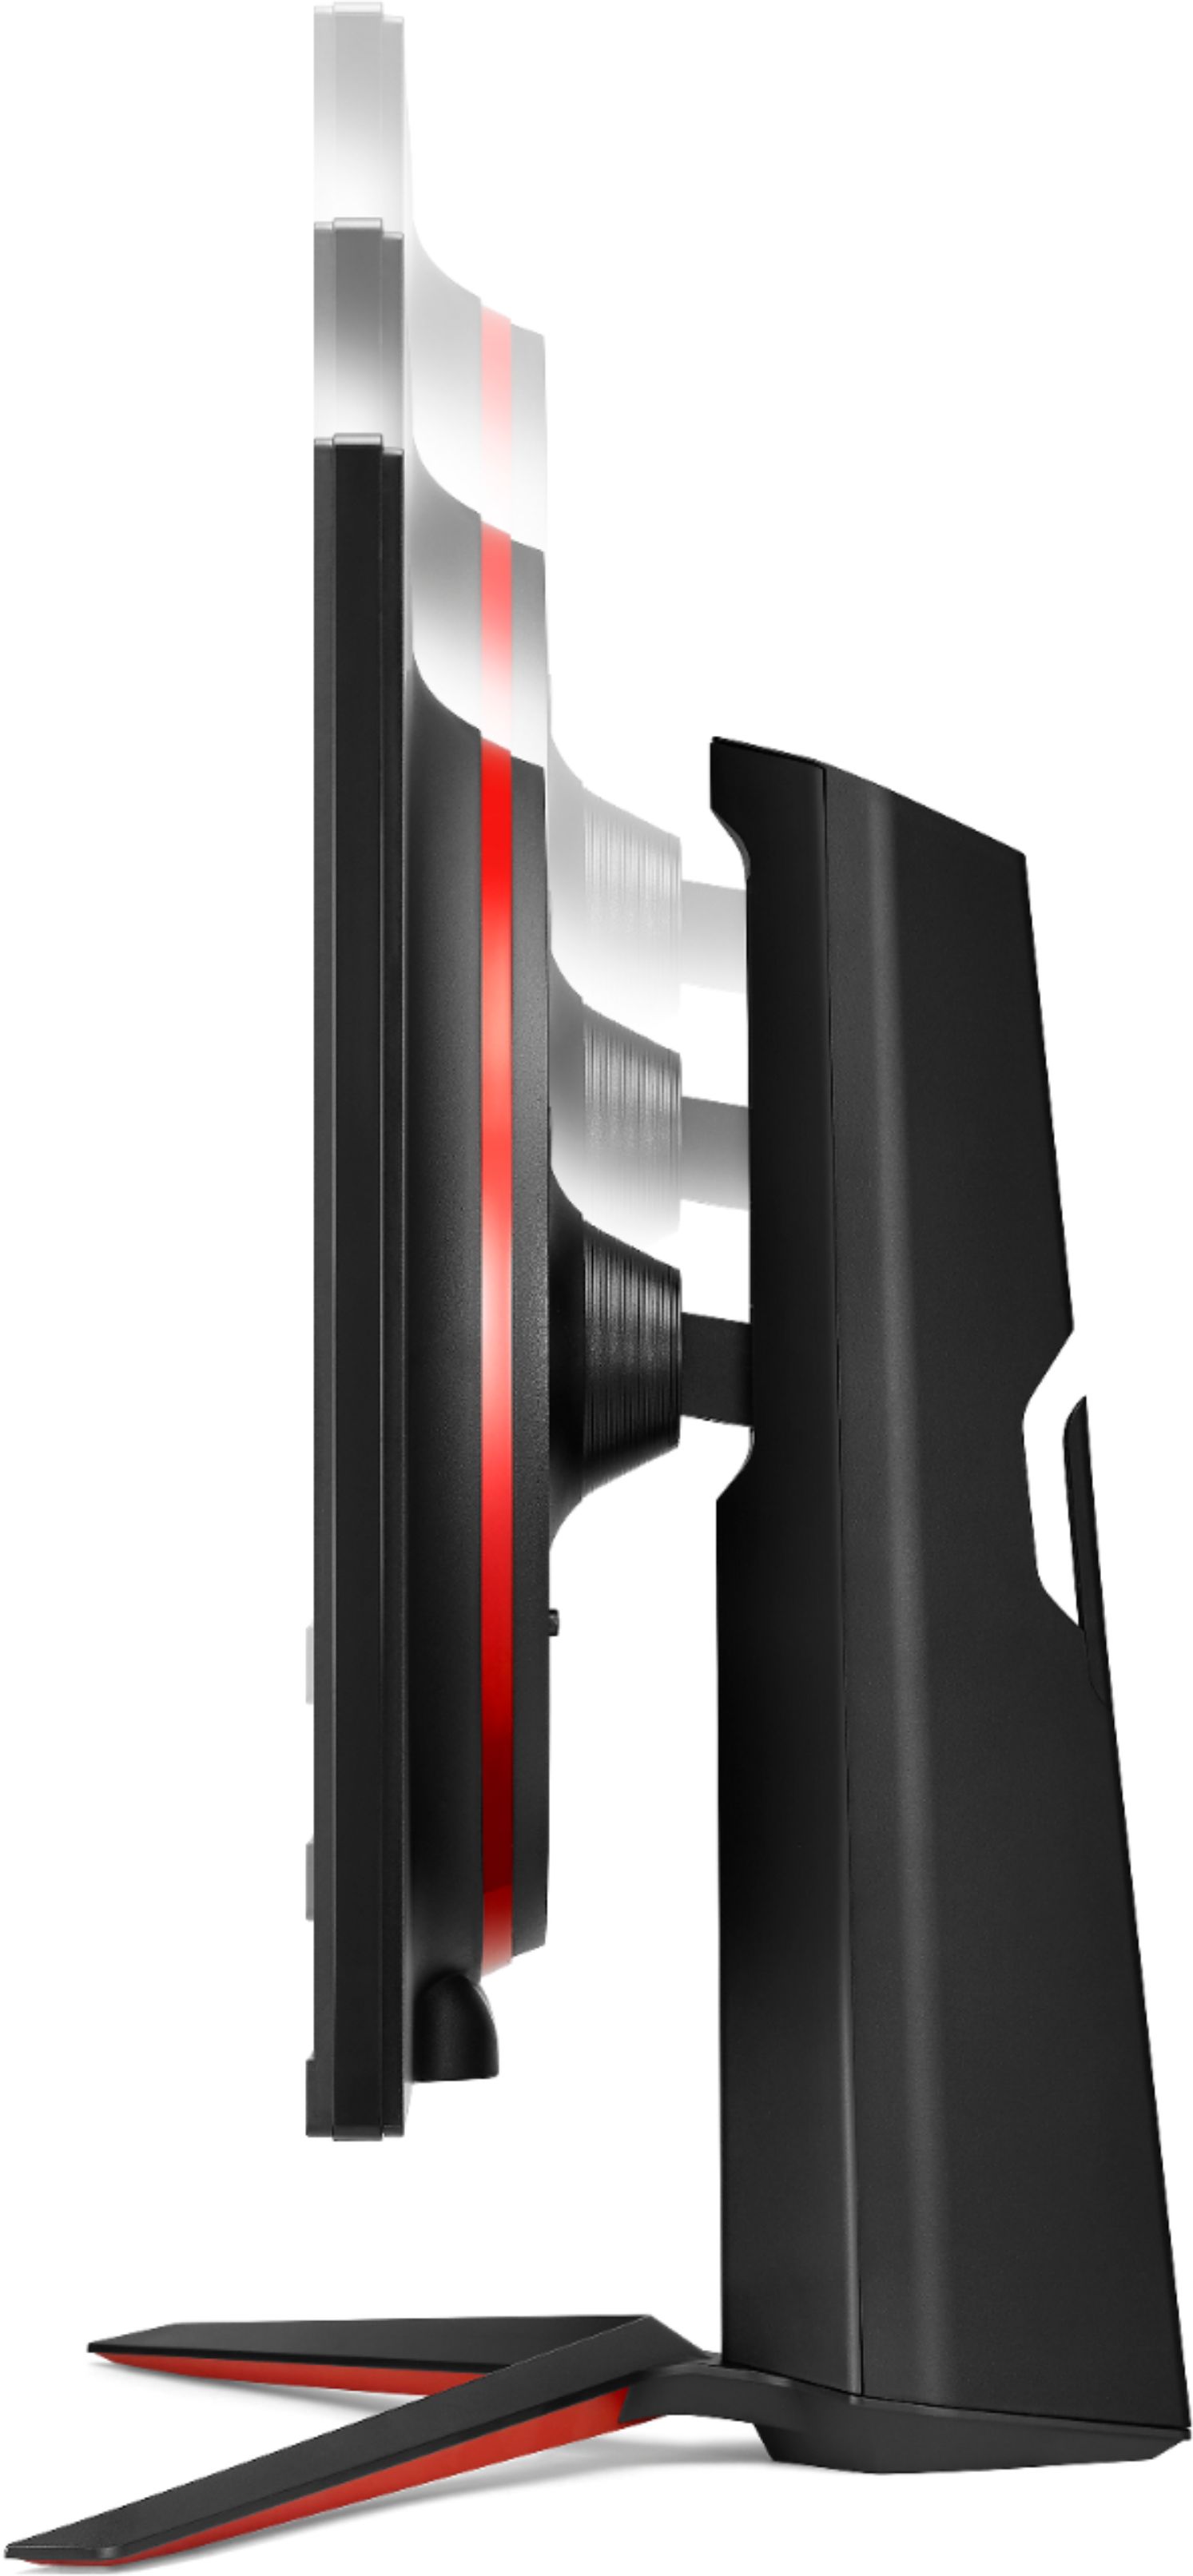 LG UltraGear 27GP850-B 27-inch IPS G-Sync Monitor, Black,(Renewed)  195174008508